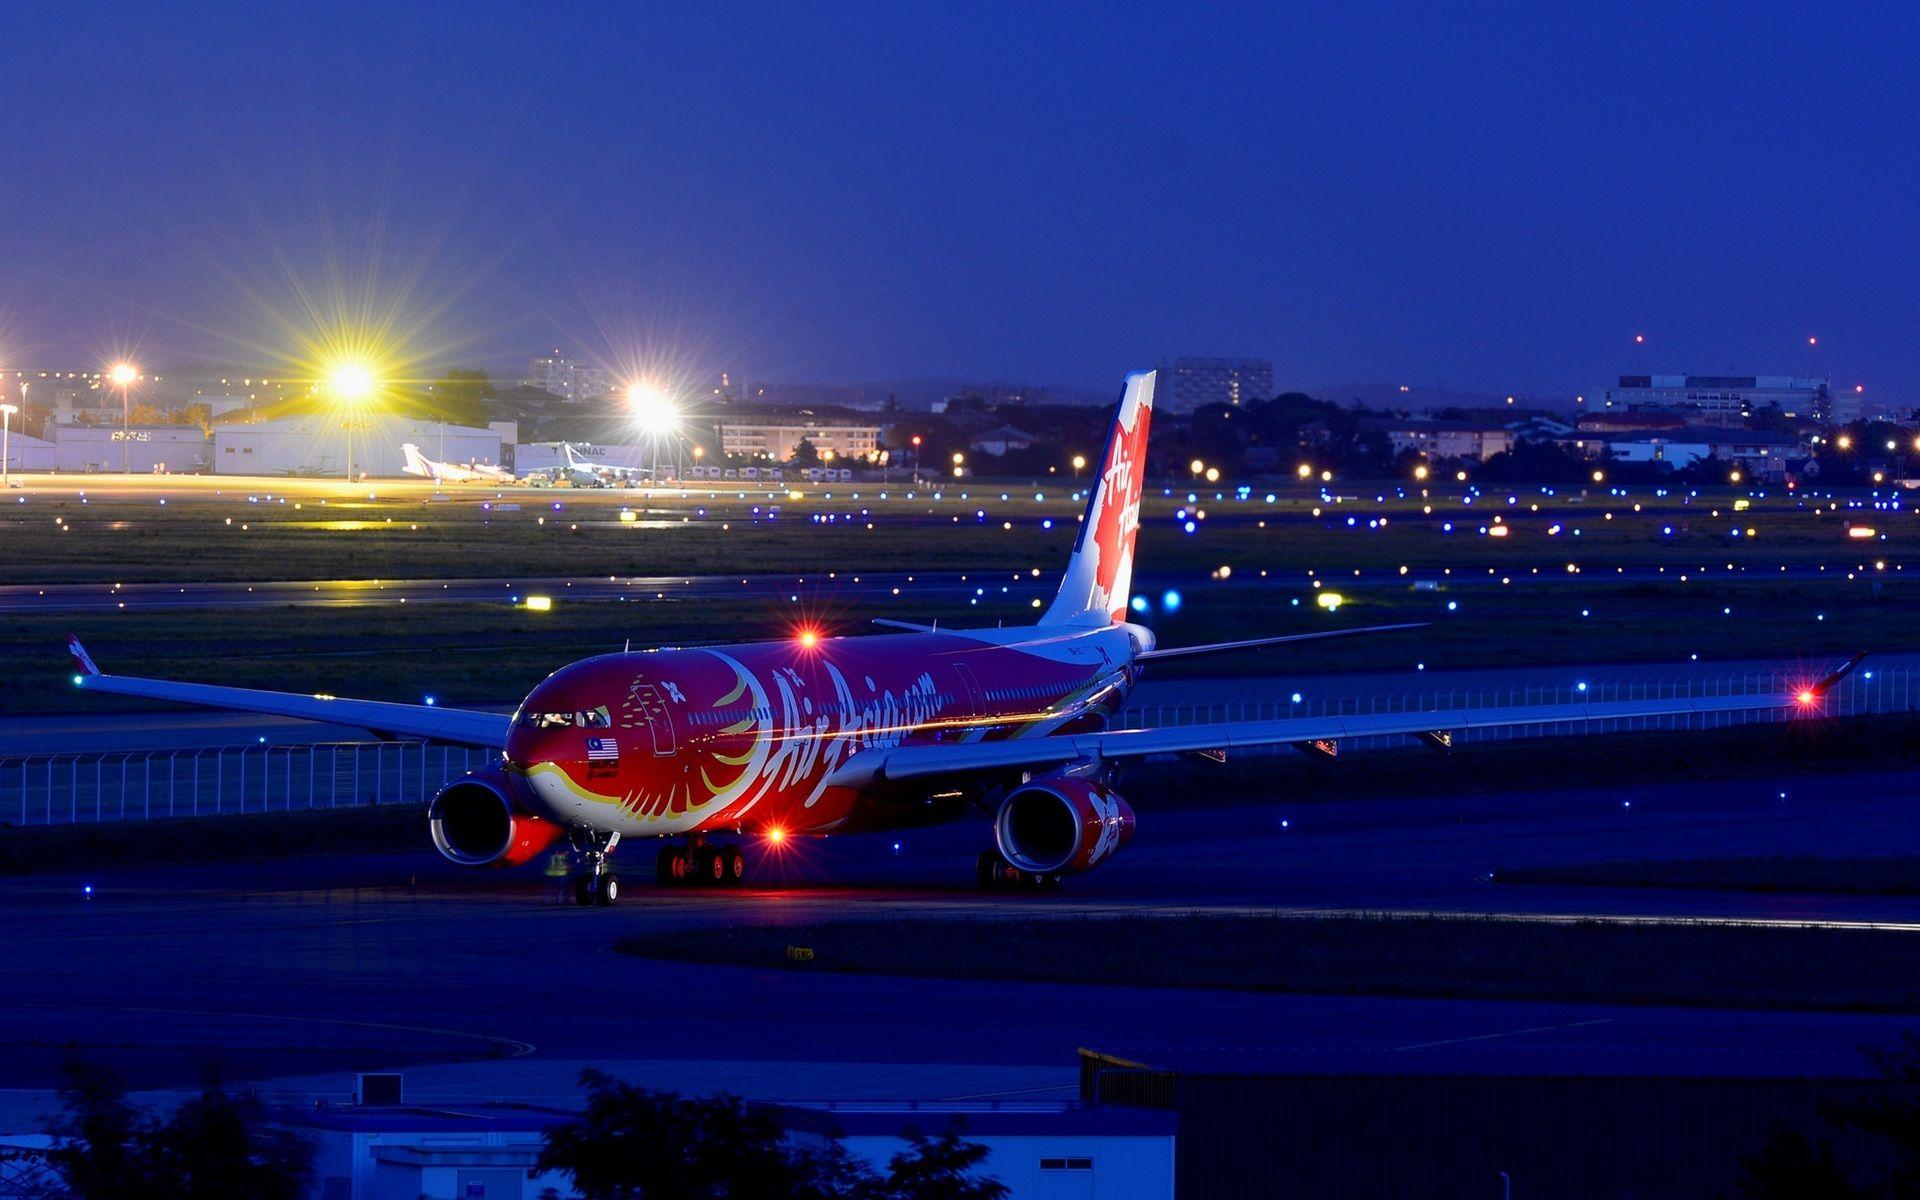 Airbus A330 Passenger Aircraft, airport, night, city wallpaper